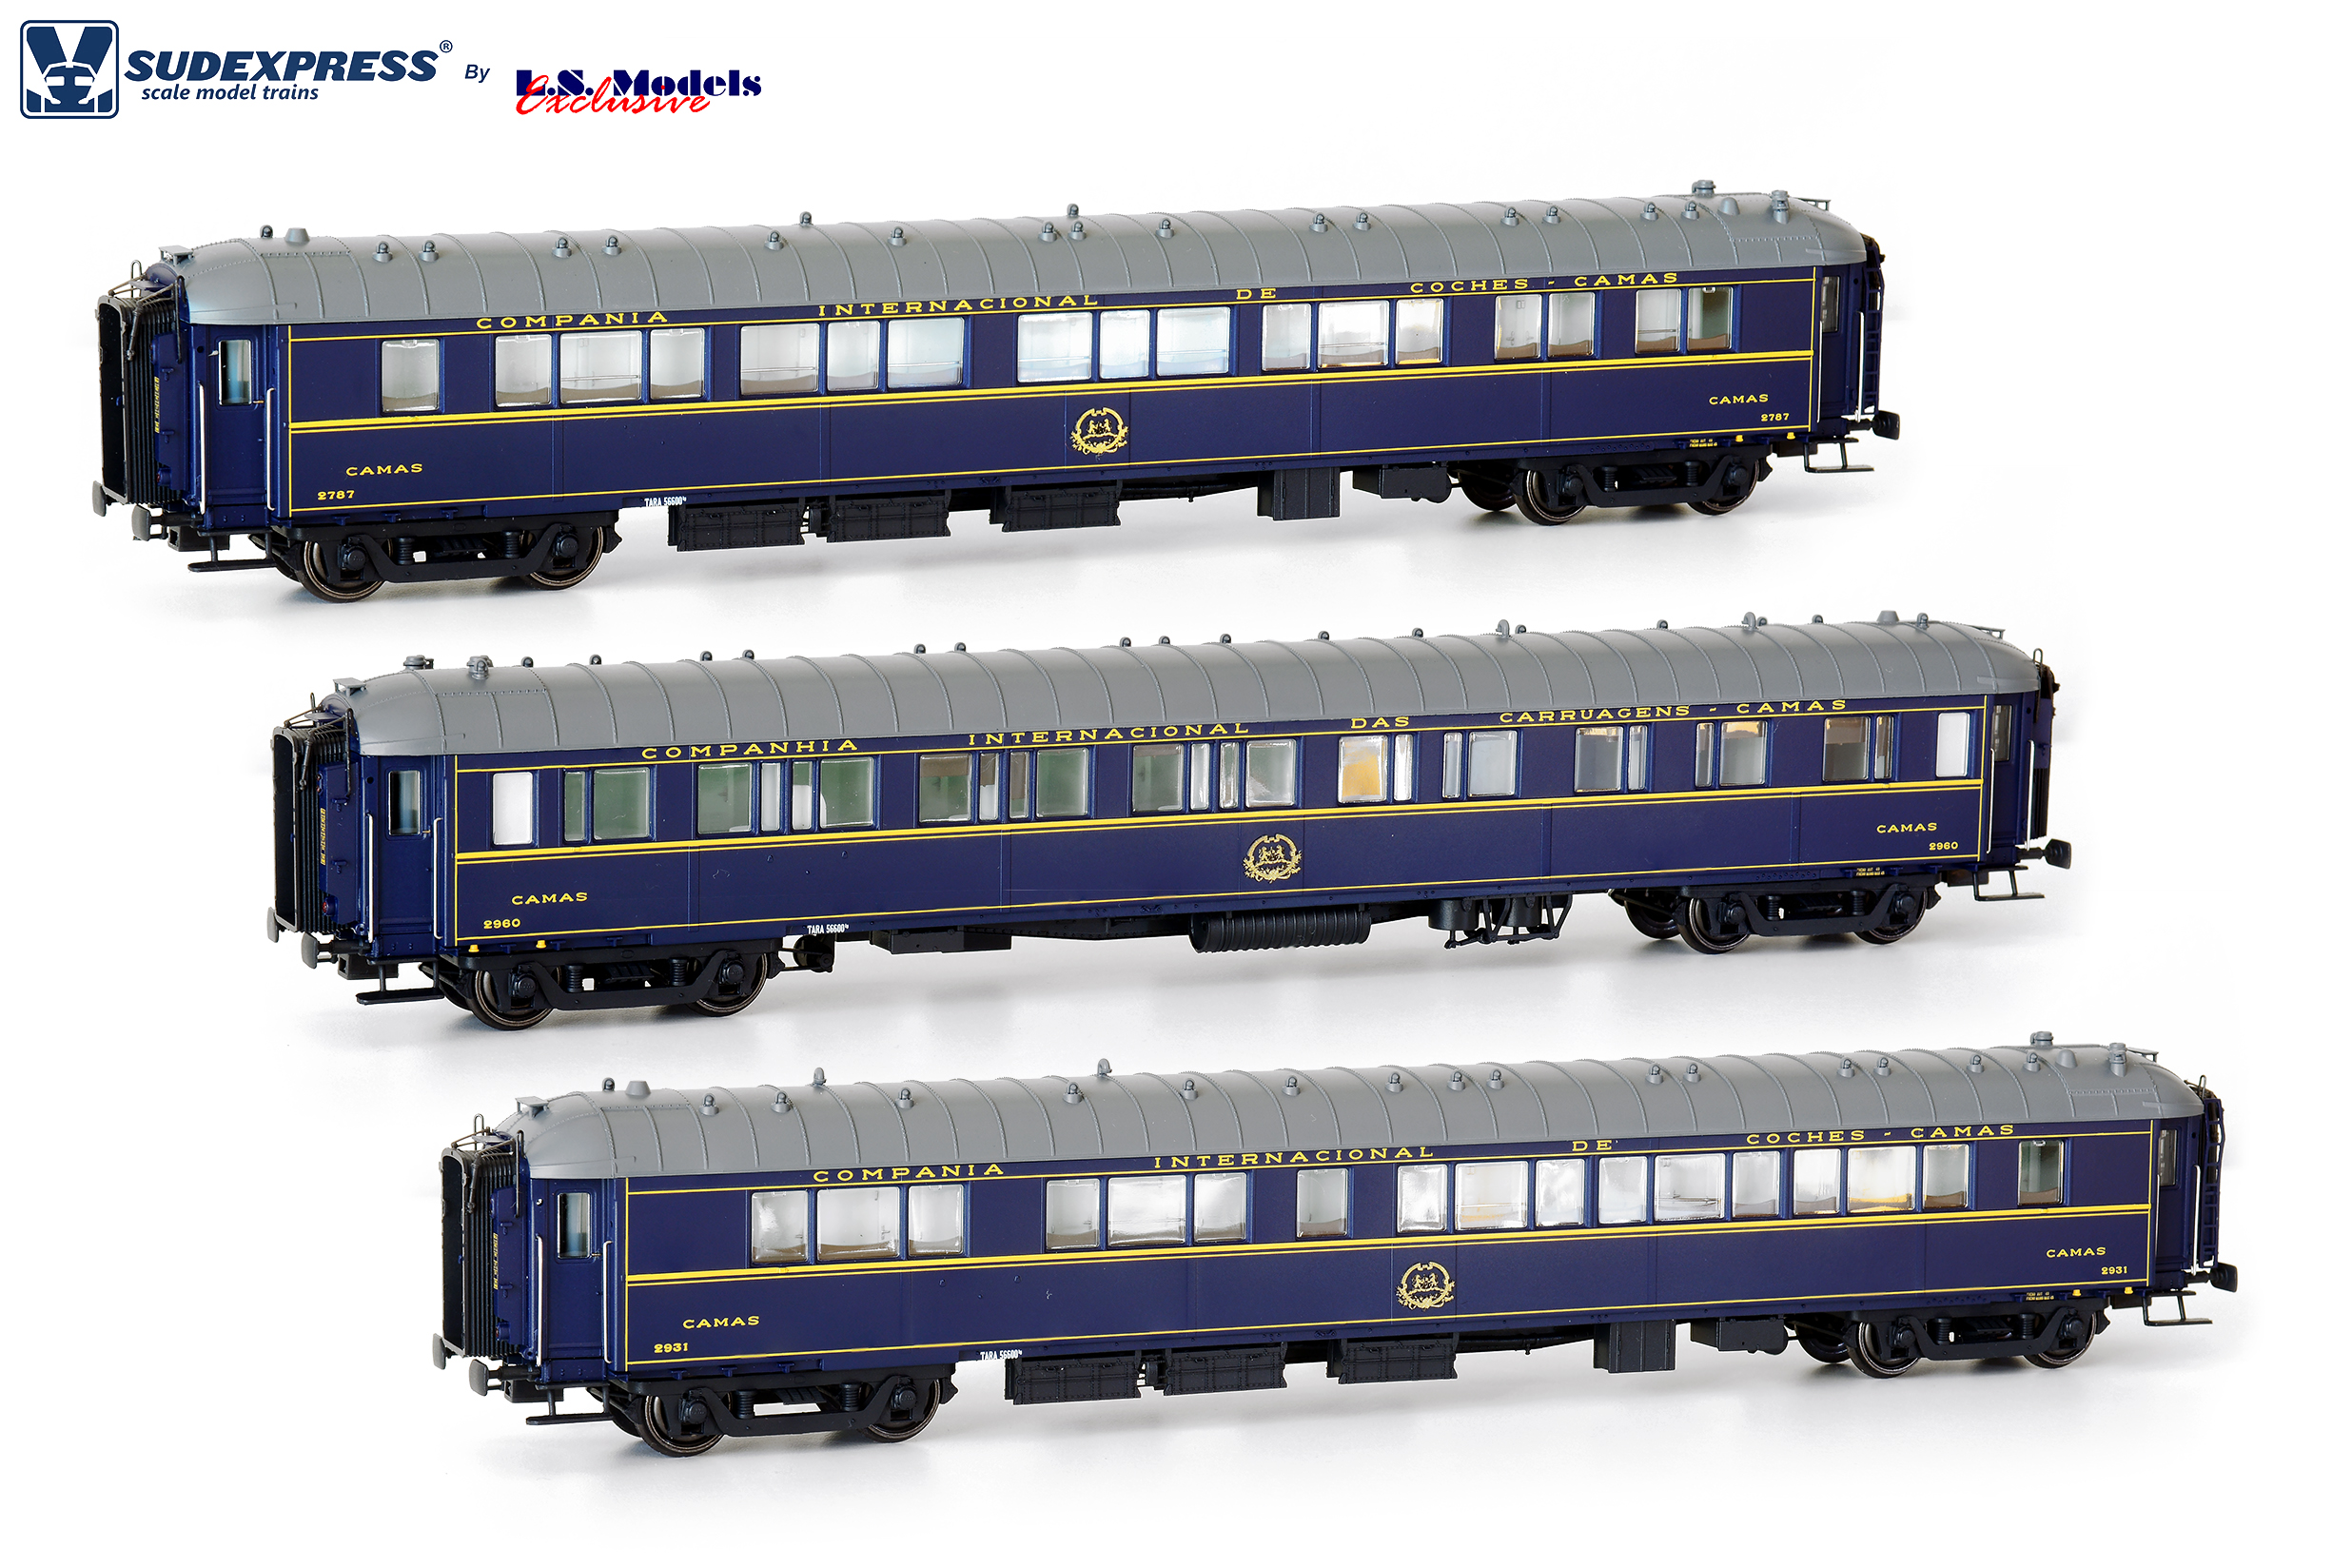 Ciwl Sleeper Coach S2 2796 Sudexpress Scale Model Trains